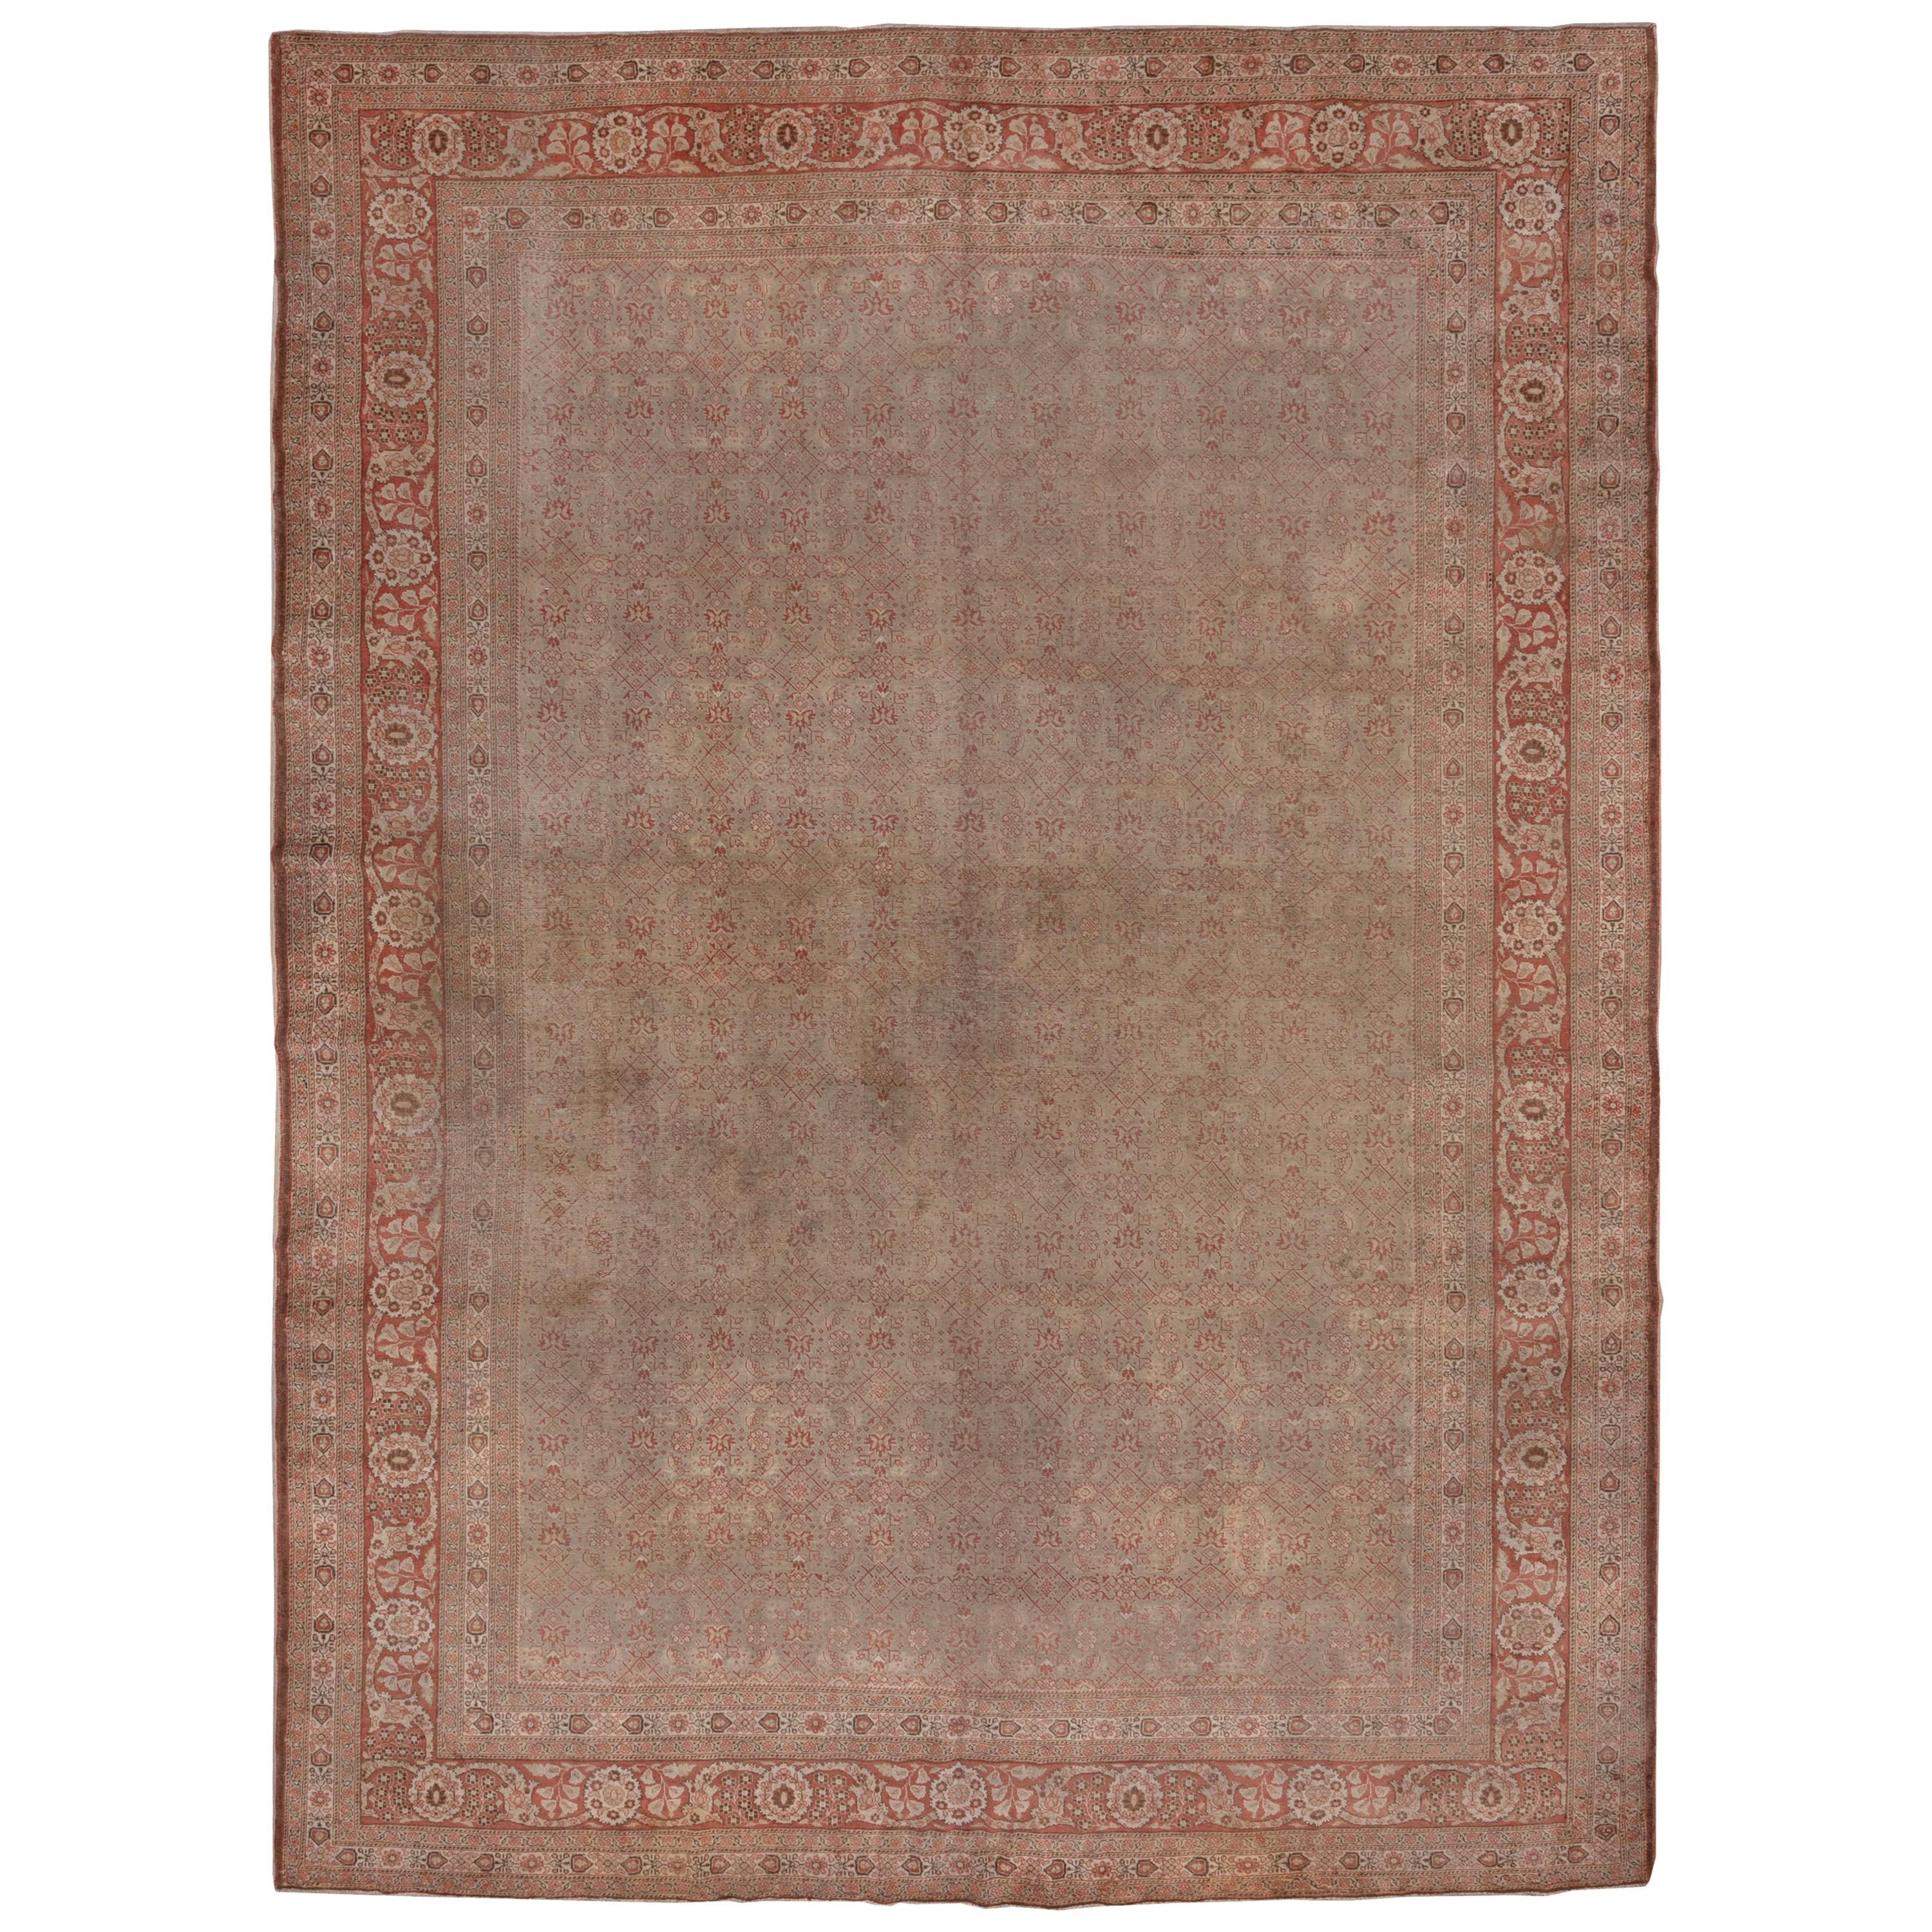 Antique Tabriz Carpet, circa 1900s